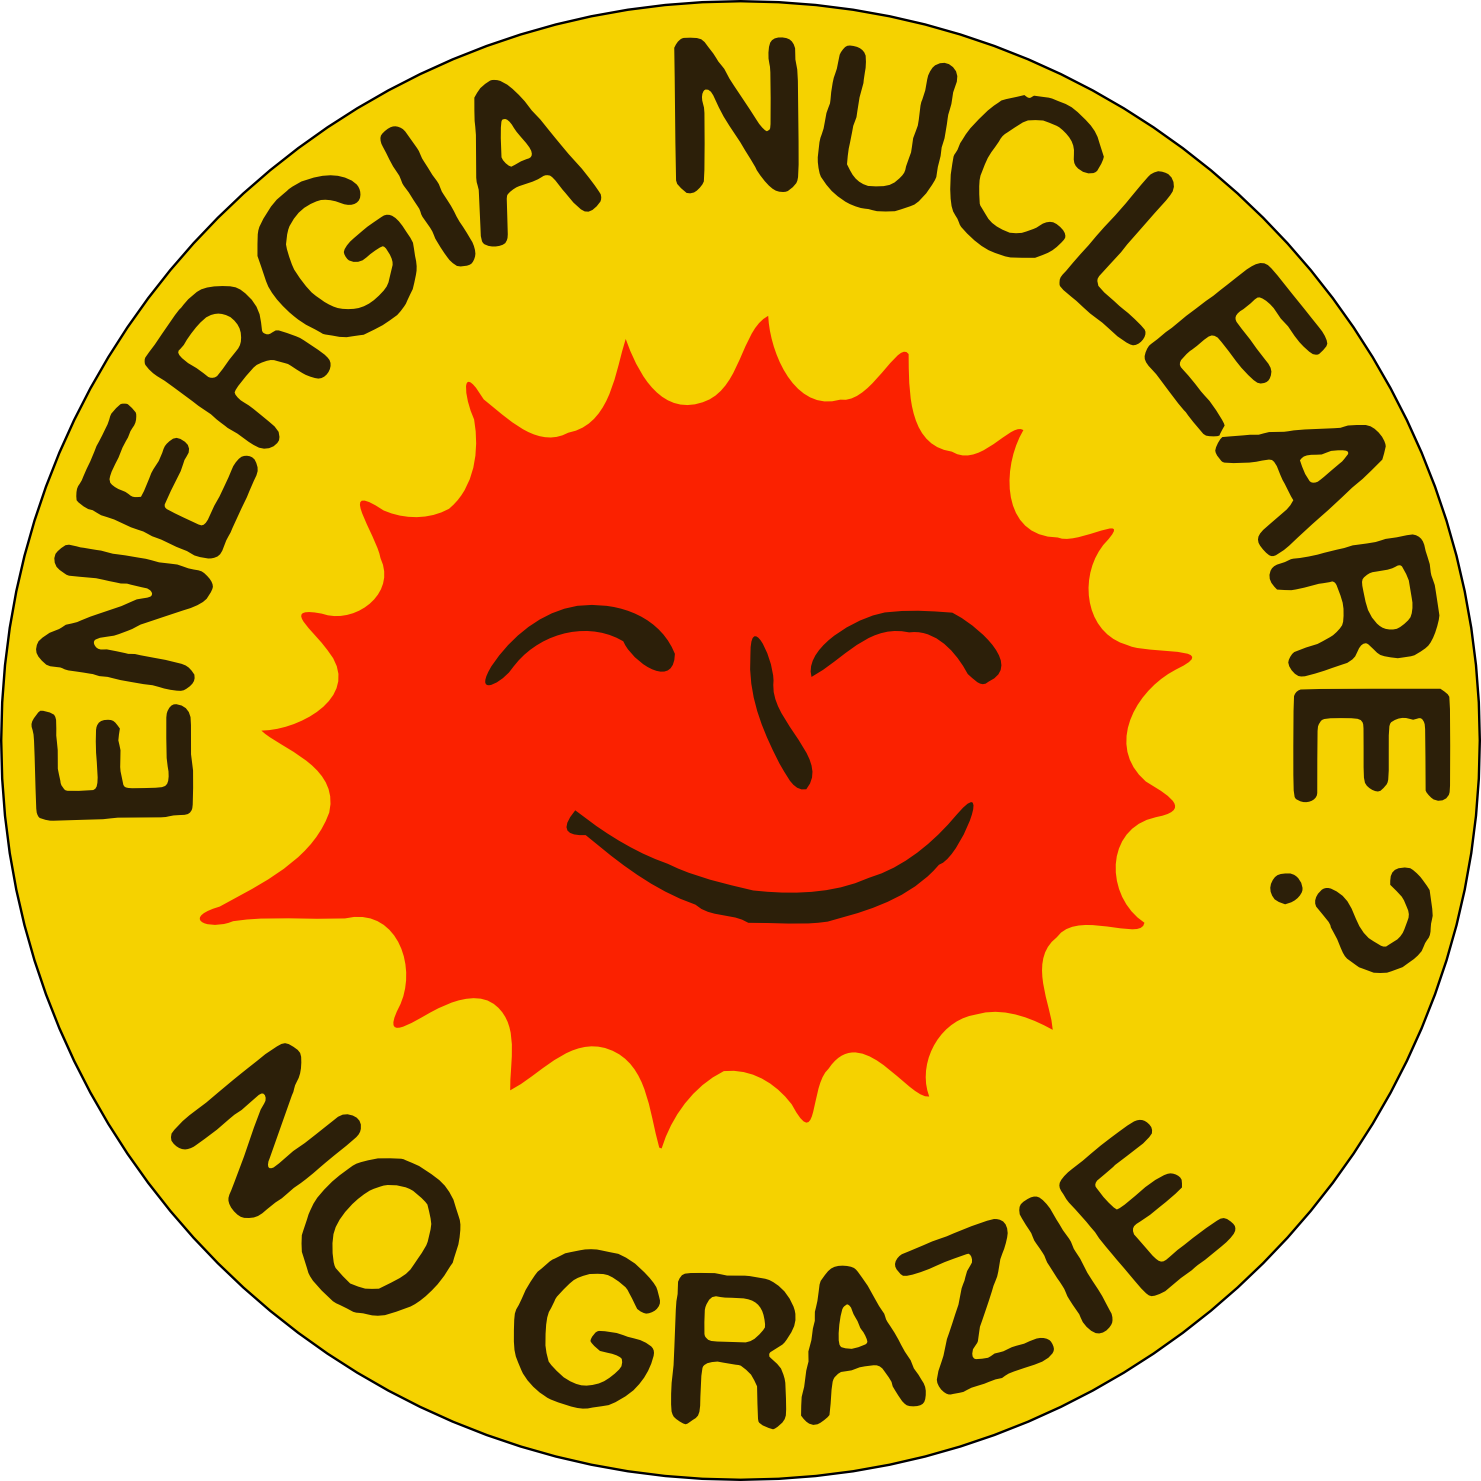 nucleare no grazie logo